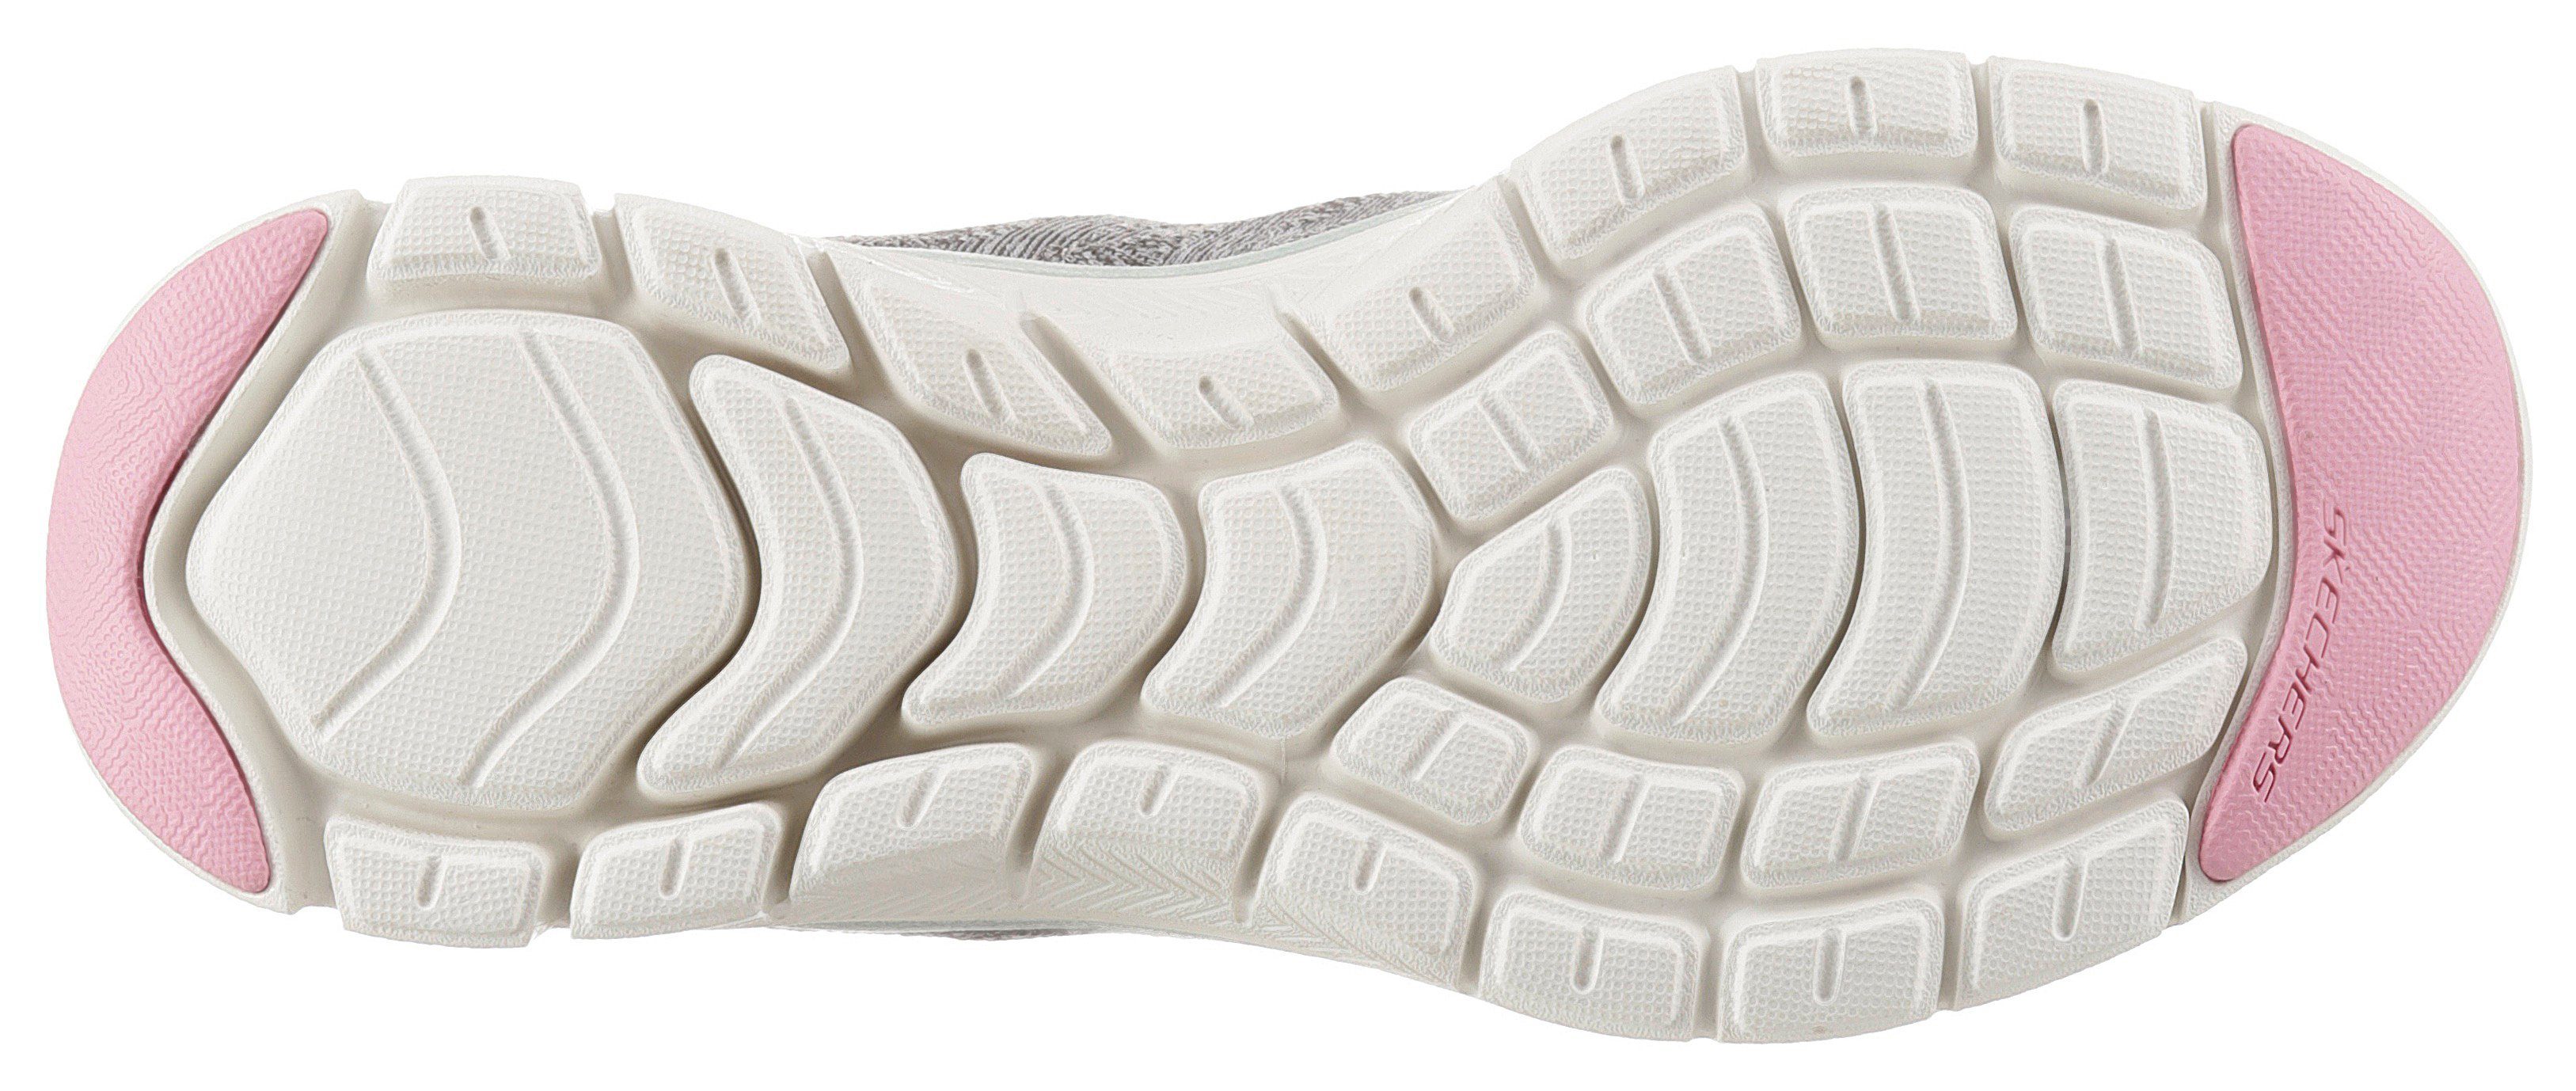 Skechers FLEX Foam MOVE Air FRESH APEEAL mit 4.0 Memory Sneaker Cooled grau-mint